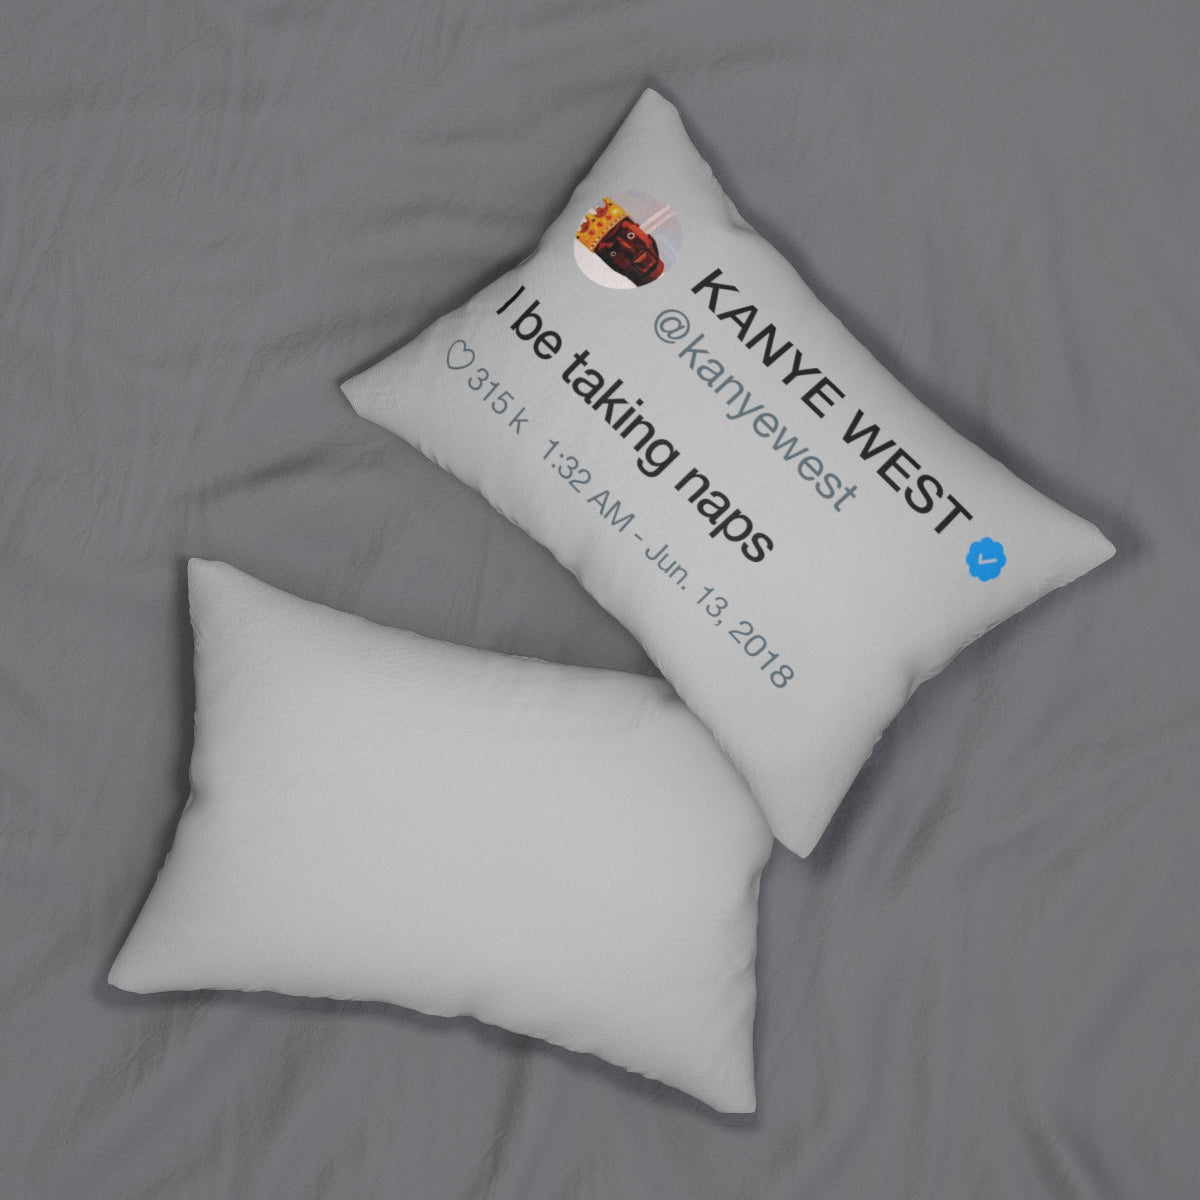 Kanye West Naps Pillow + Pillow Sham - I be taking naps